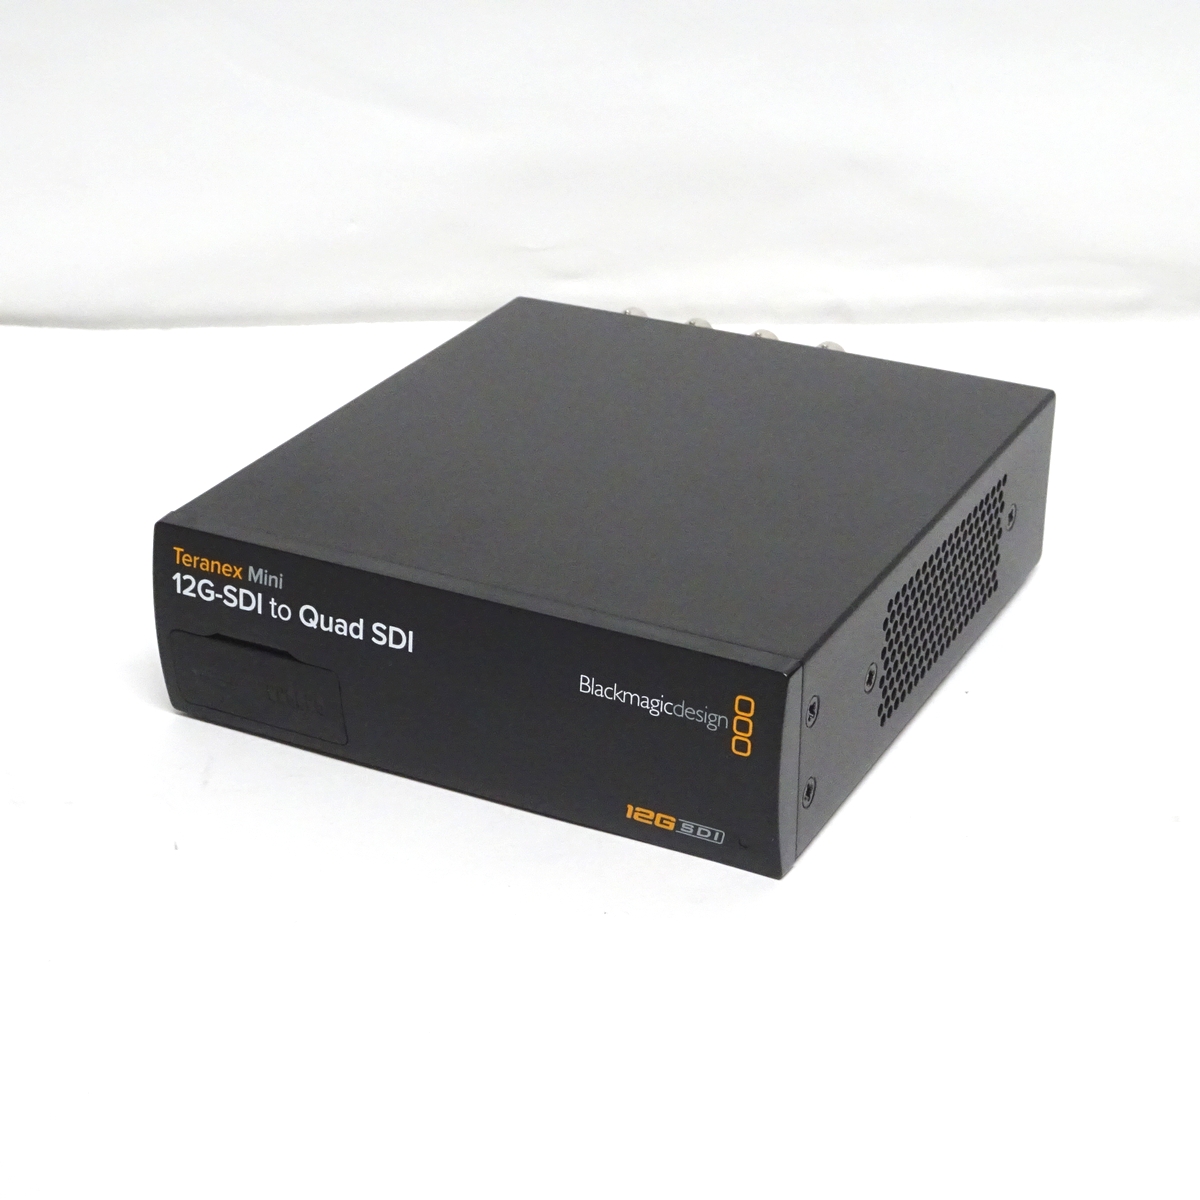 【中古】Blackmagic Design Teranex Mini 12G-SDI to Quad SDI コンバーター【愛知発送1】